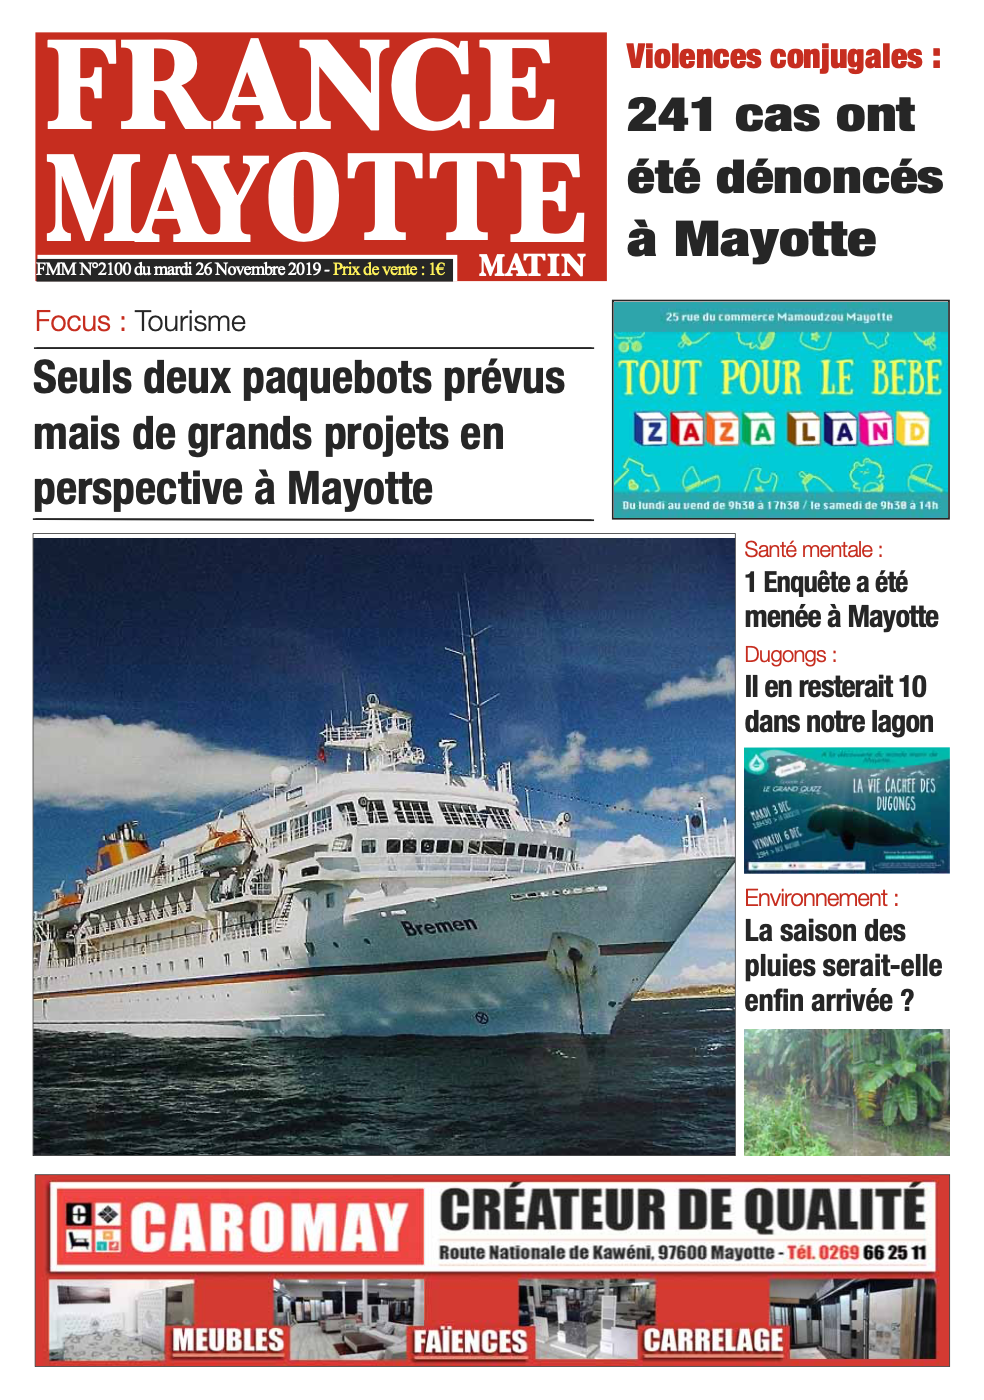 France Mayotte Mardi 26 novembre 2019